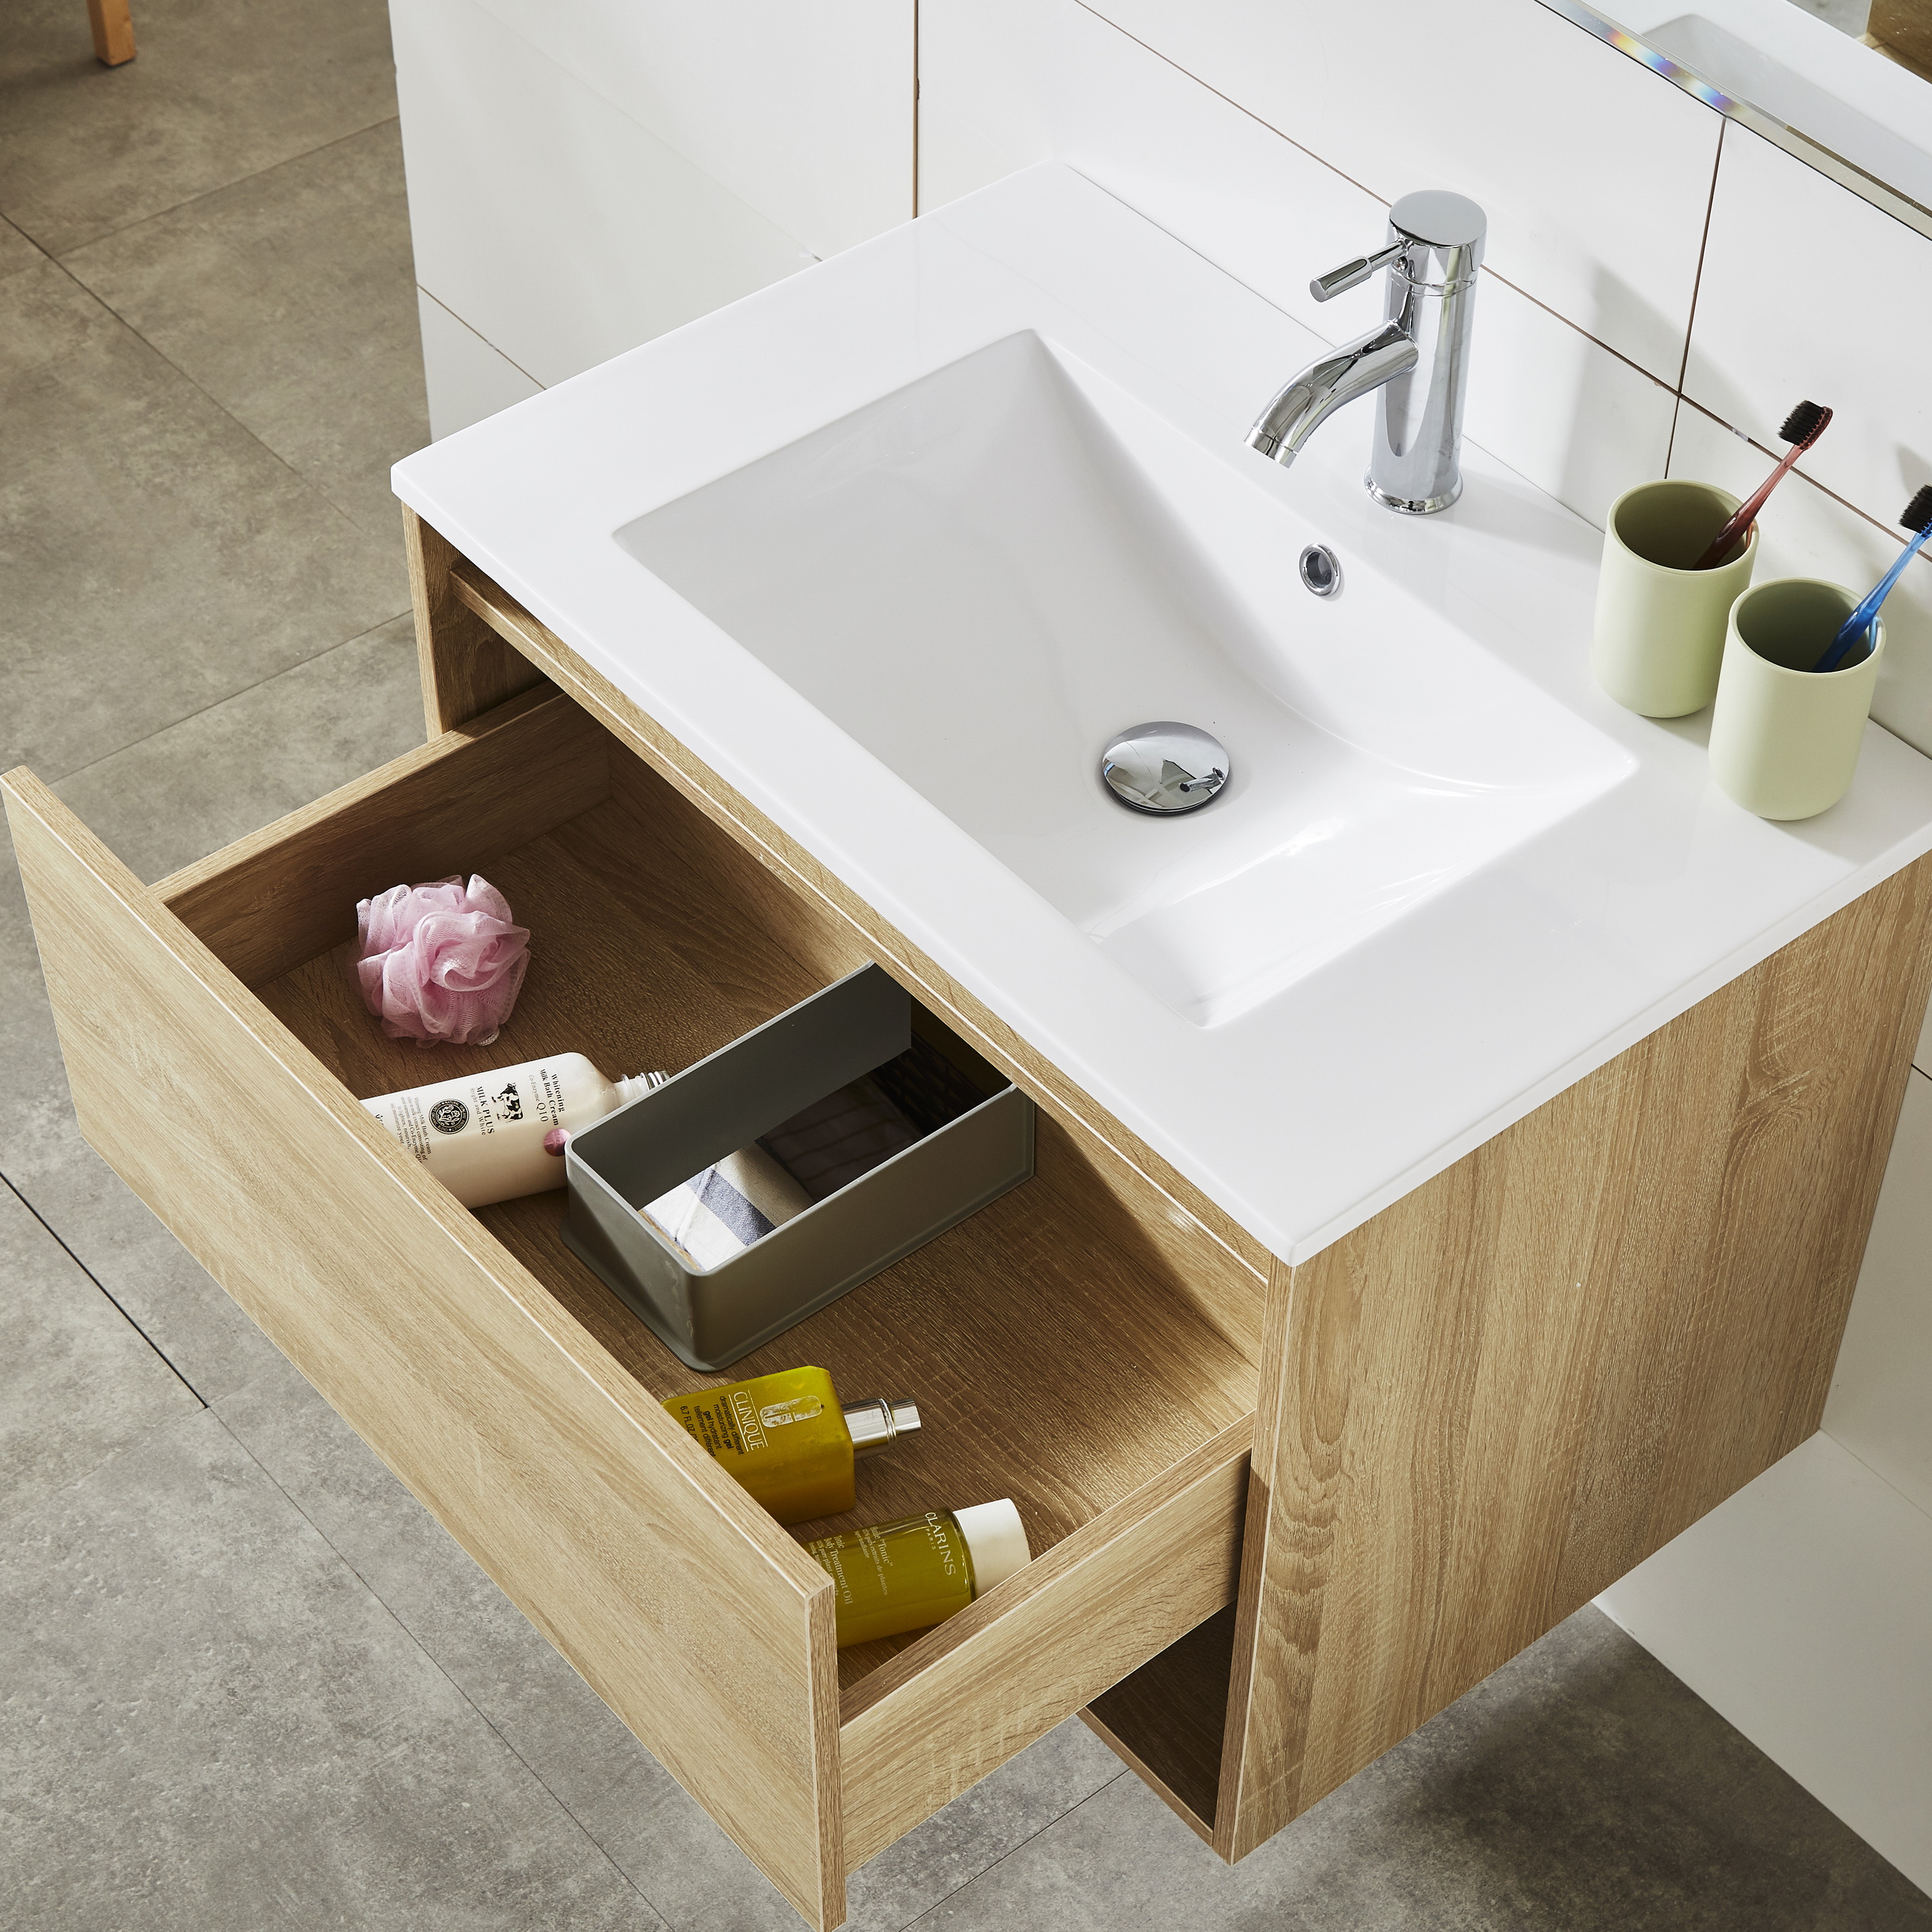 Simple Fasion MDF Melamine Modern Bathroom Basin Furniture Wall Cabinets with Mirror